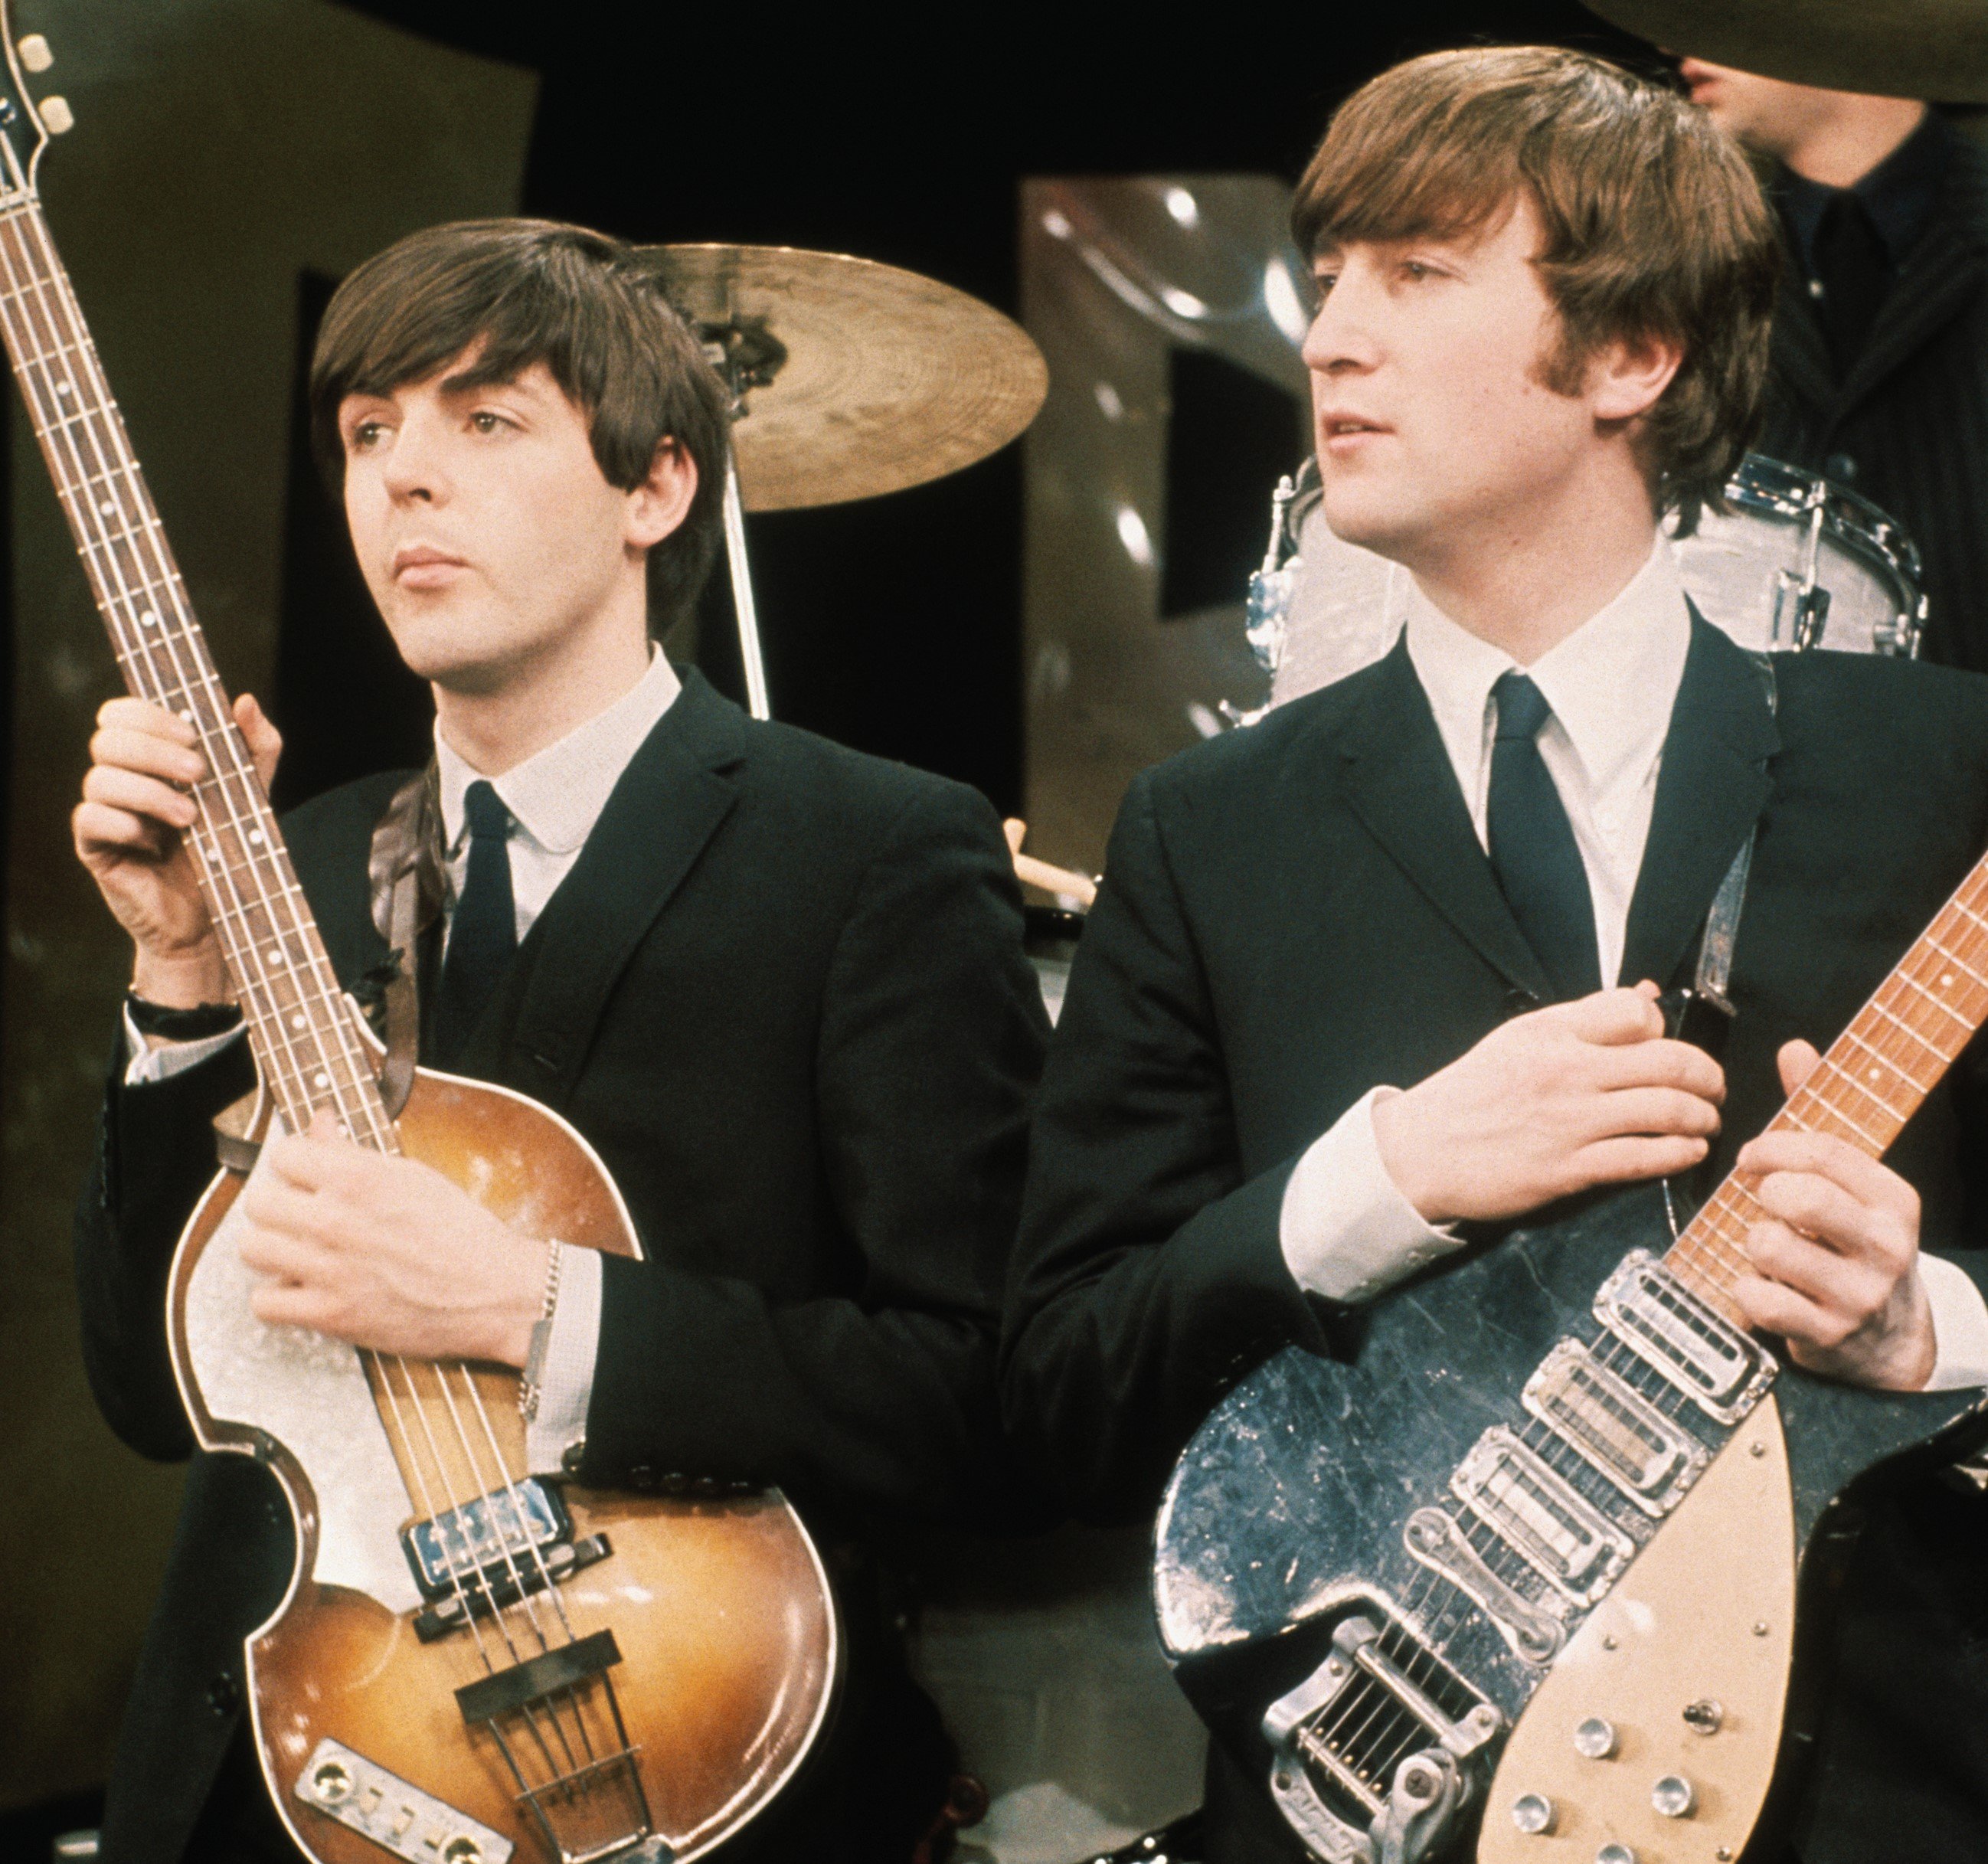 Paul McCartney and John Lennon with guitars